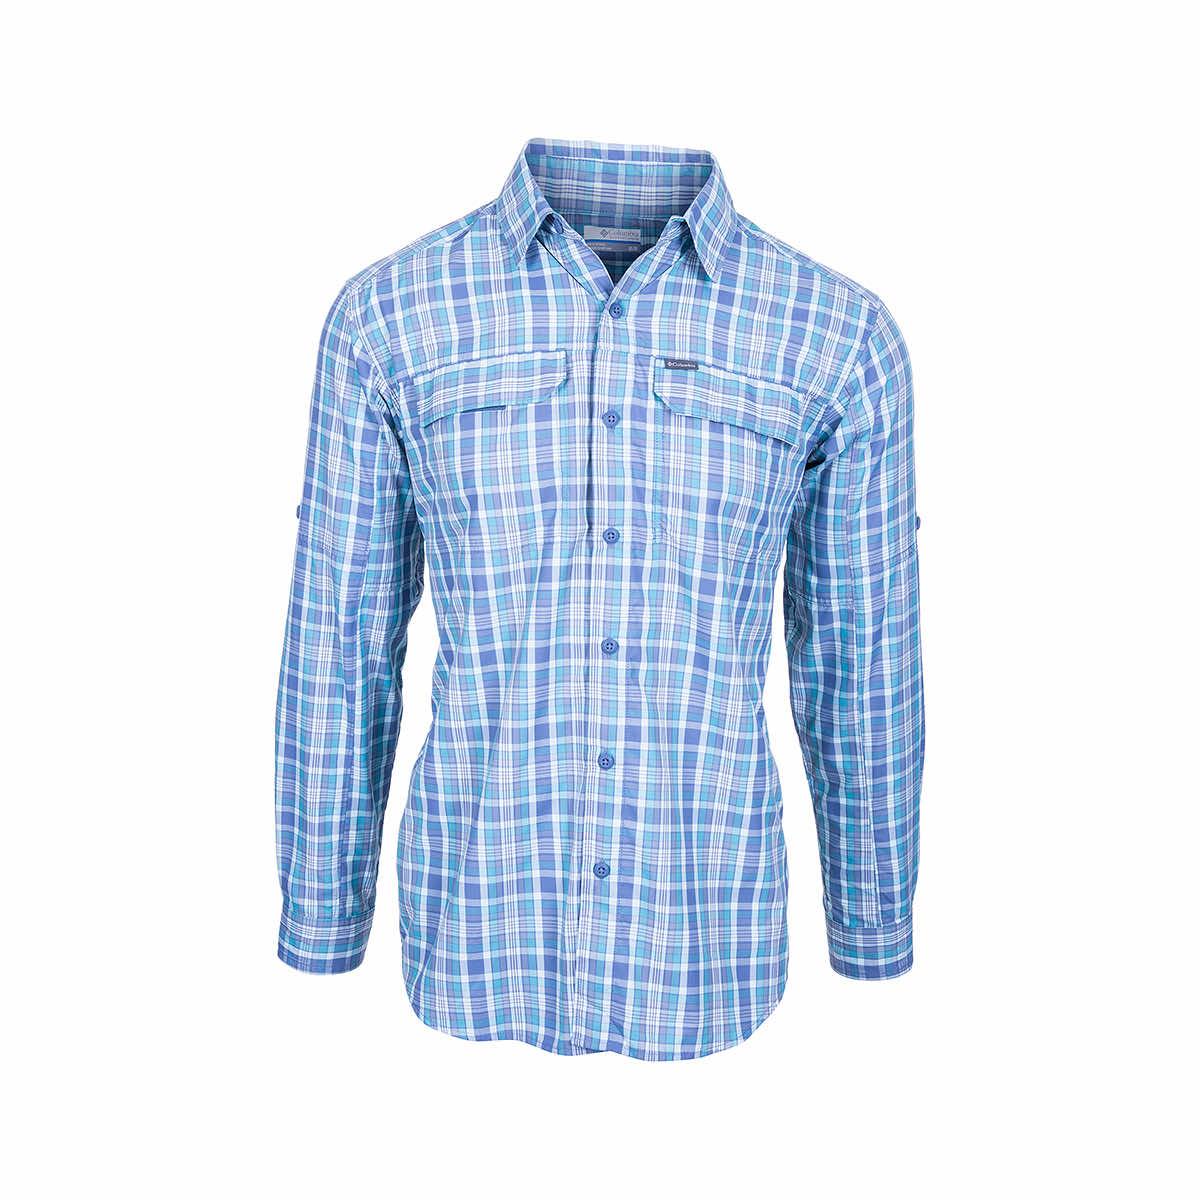  Men's Silver Ridge 2.0 Plaid Long Sleeve Button Up Shirt